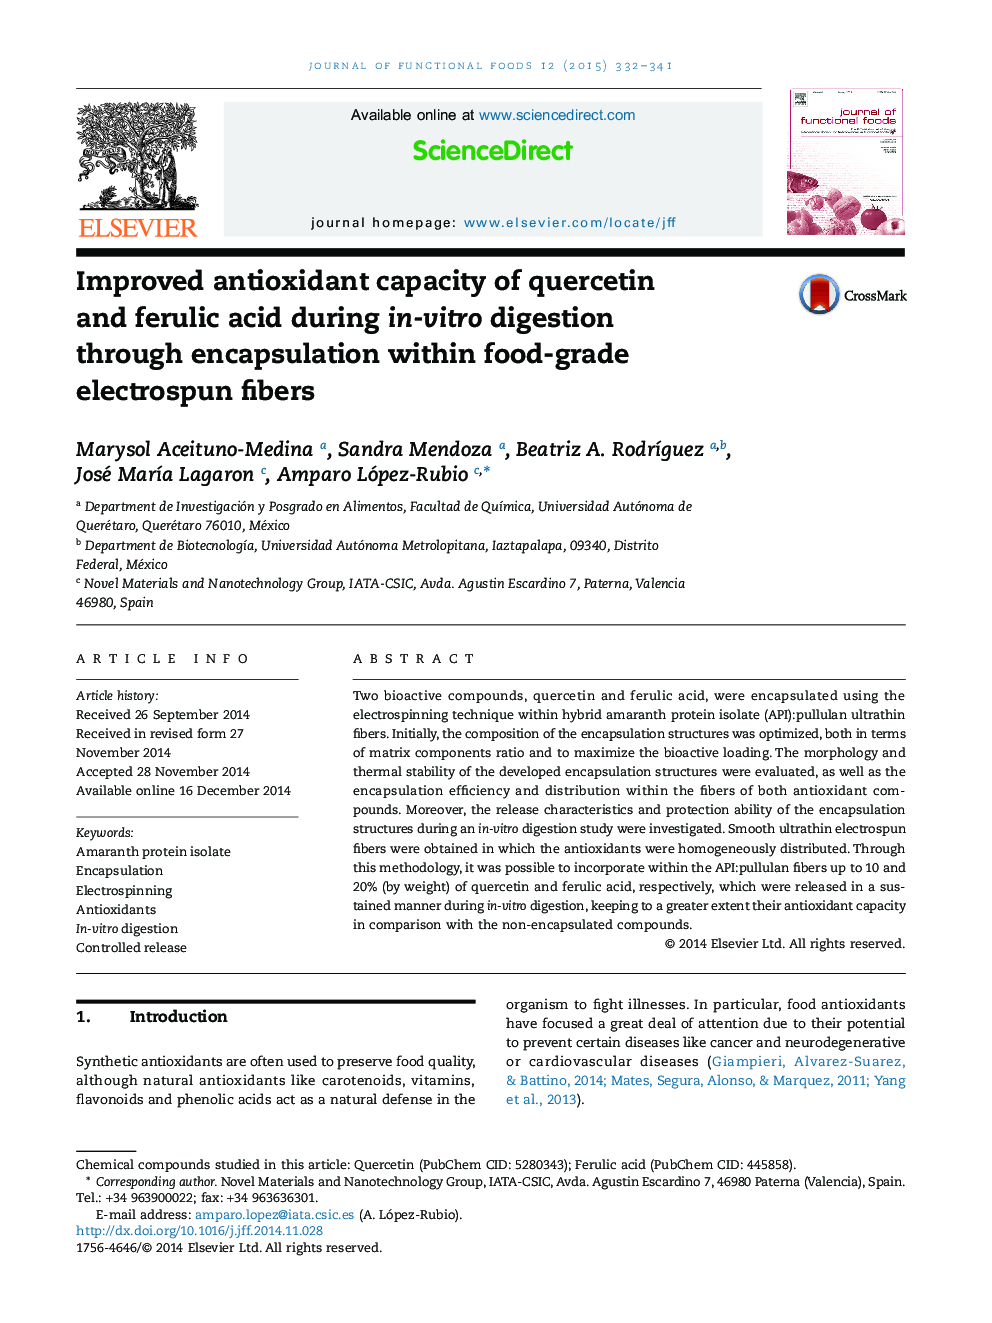 Improved antioxidant capacity of quercetin and ferulic acid during in-vitro digestion through encapsulation within food-grade electrospun fibers 